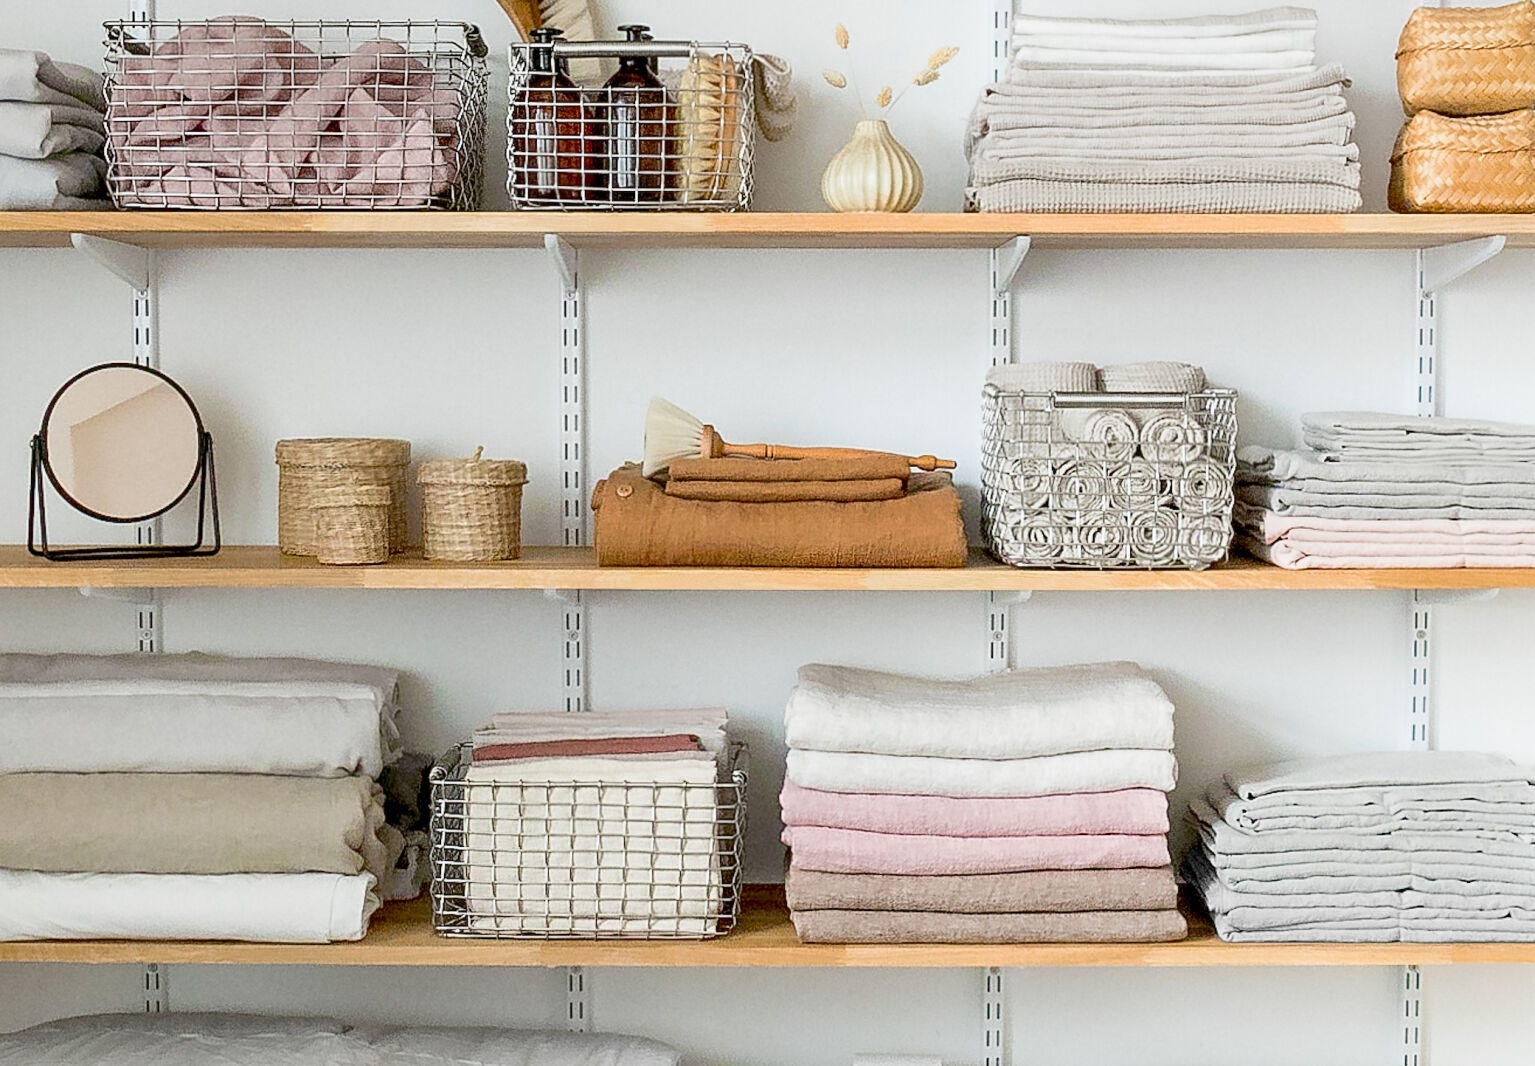 Linen closet goals: shelves with Korbo metal baskets.